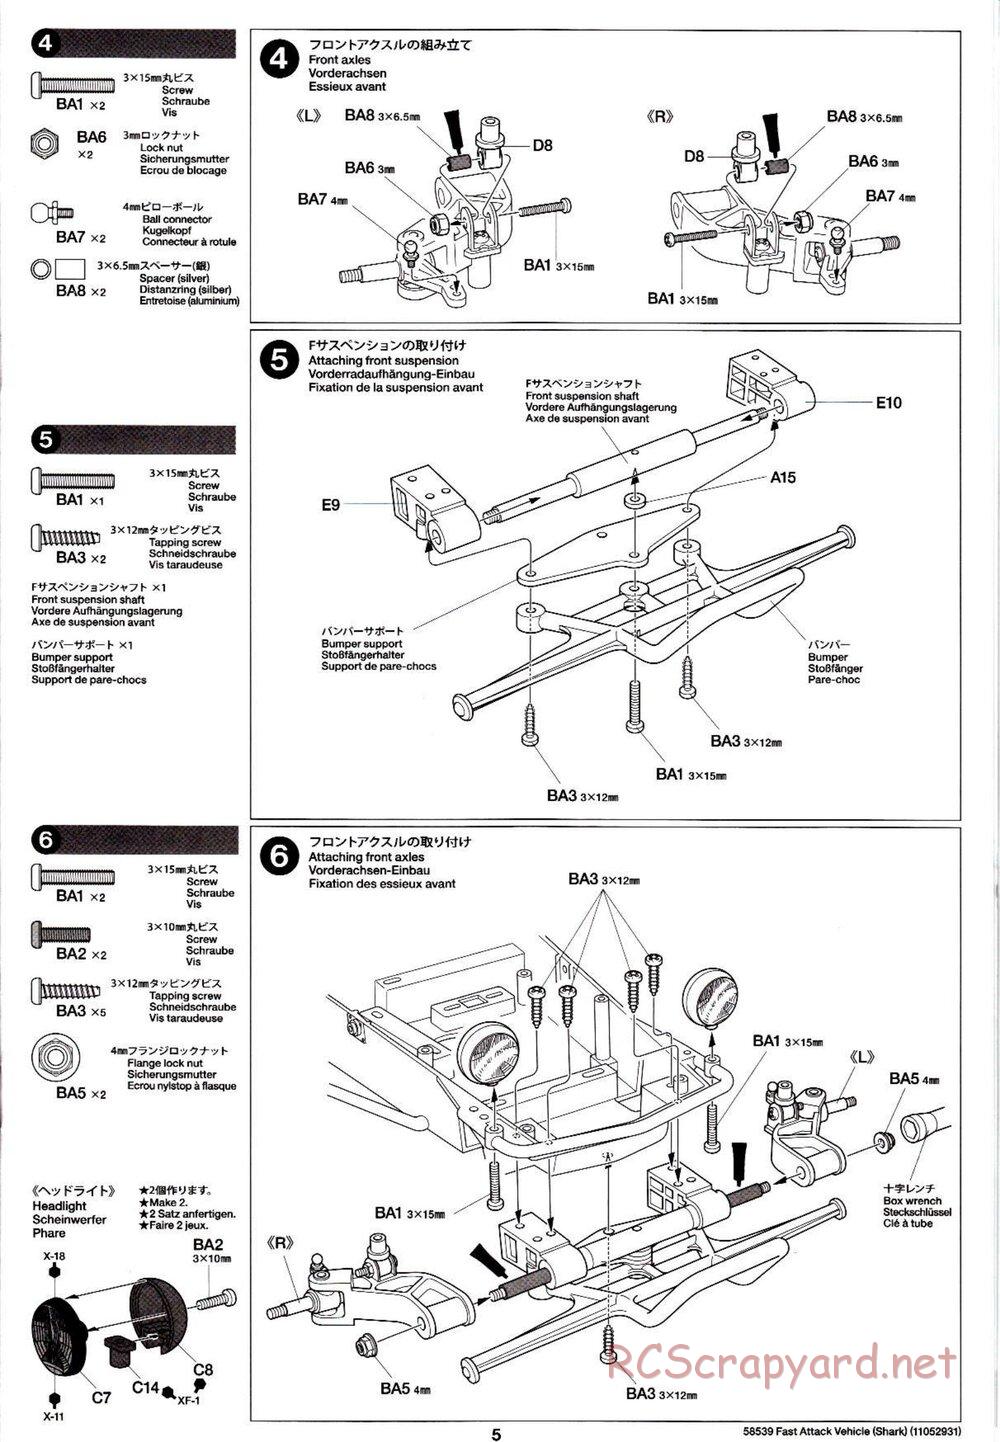 Tamiya - Fast Attack Vehicle w/ Shark Mouth - FAV Chassis - Manual - Page 5